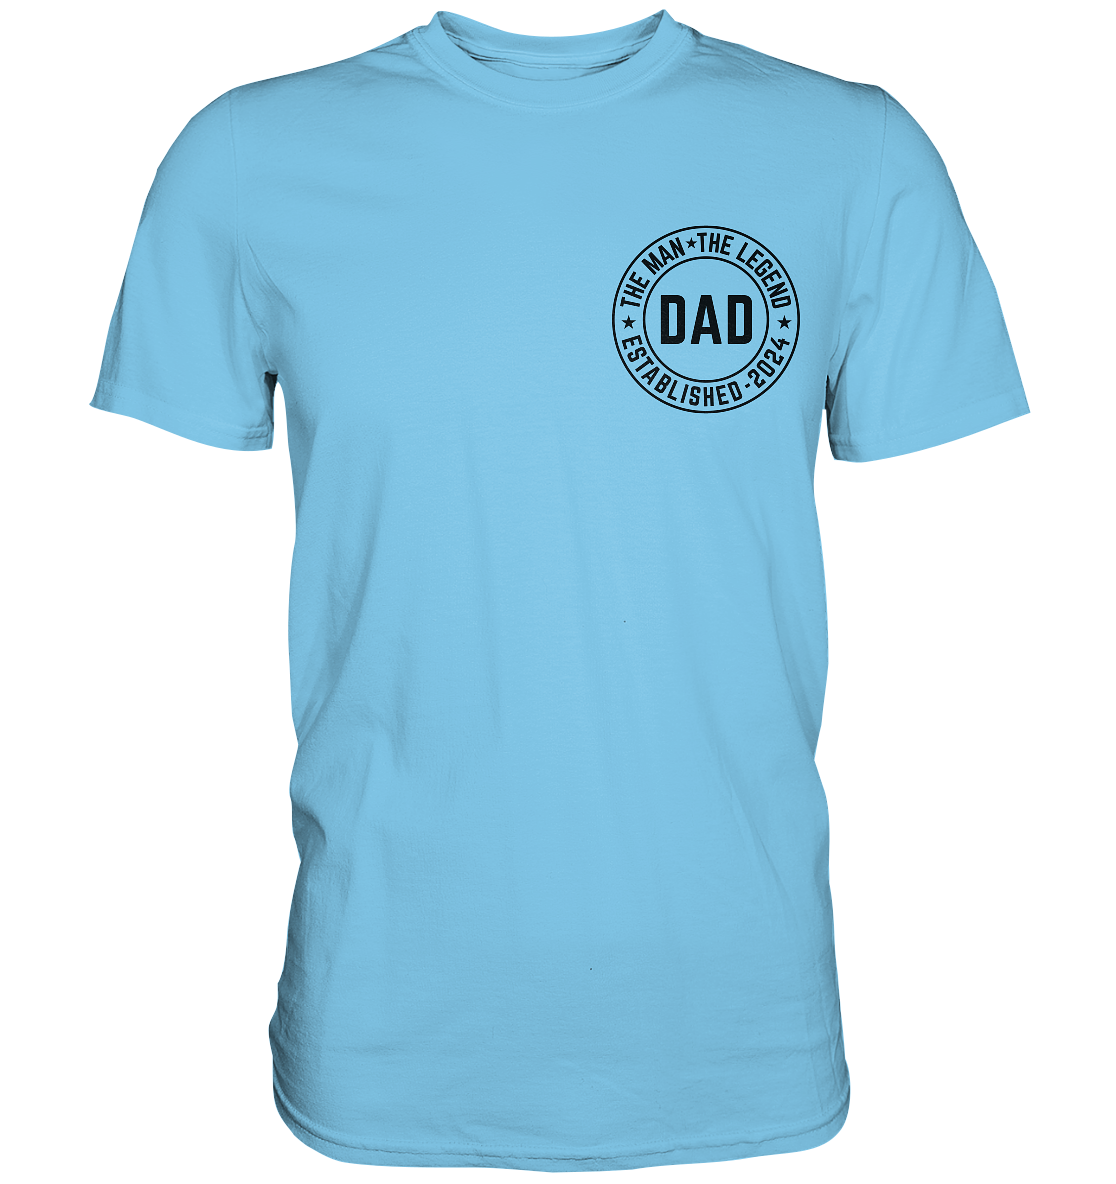 The Man, The Legend - DAD, versch. Farben - Premium Shirt